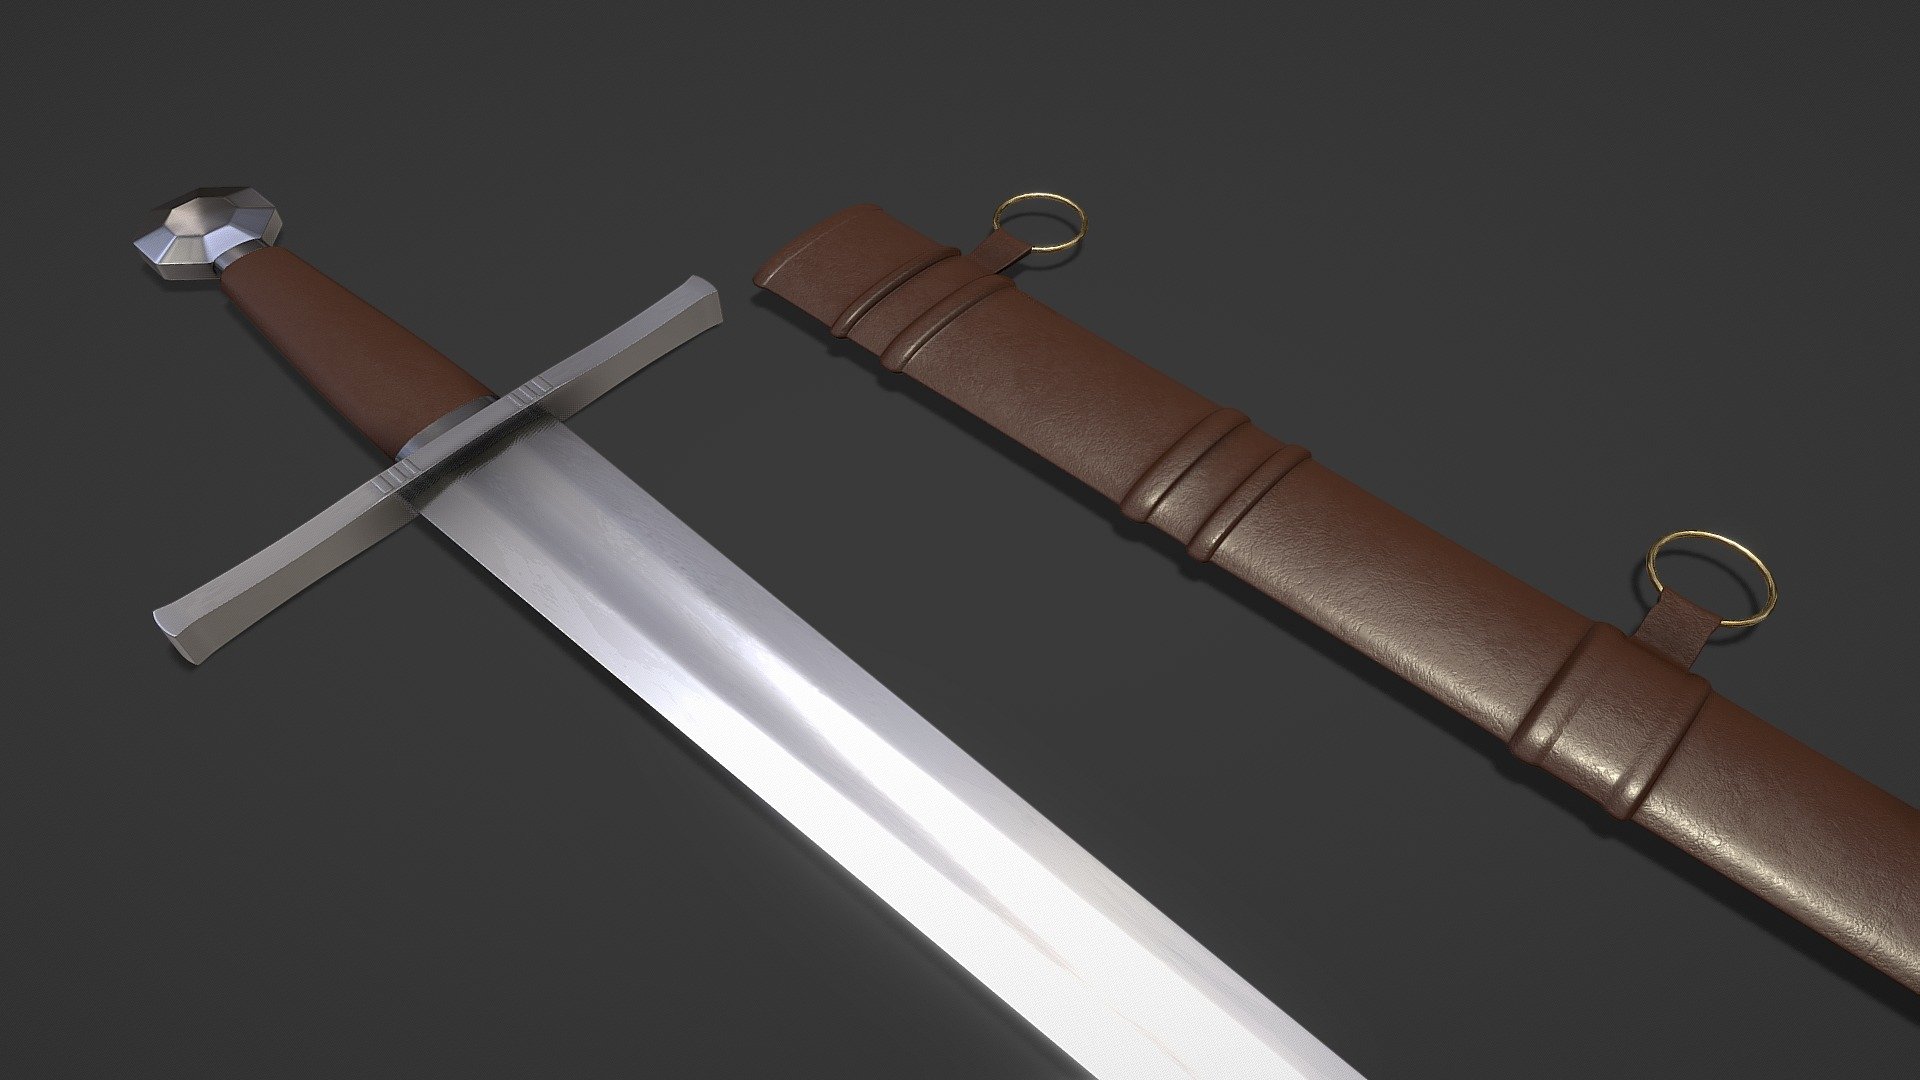 A medieval sword - Medieval Sword - 4K UHD - Buy Royalty Free 3D model by hidan1199 3d model